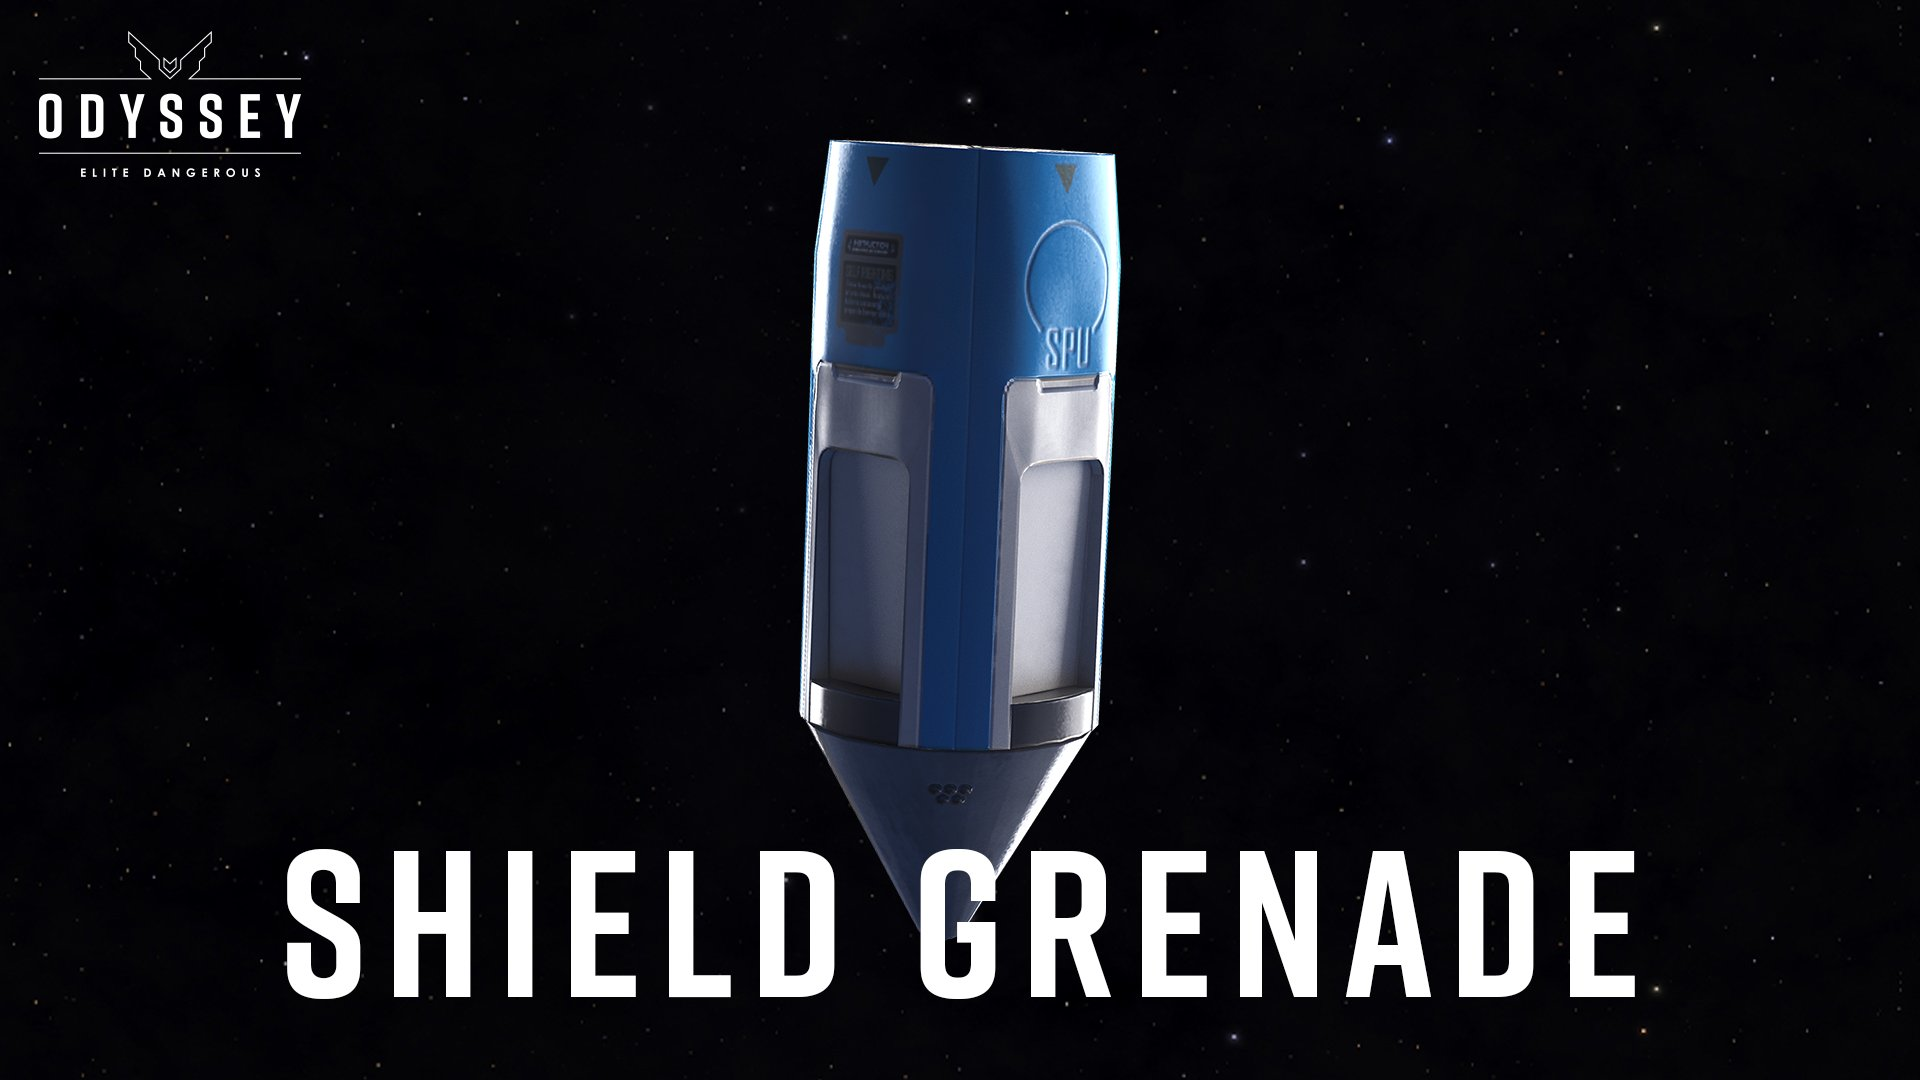 elite dangerous shield generator